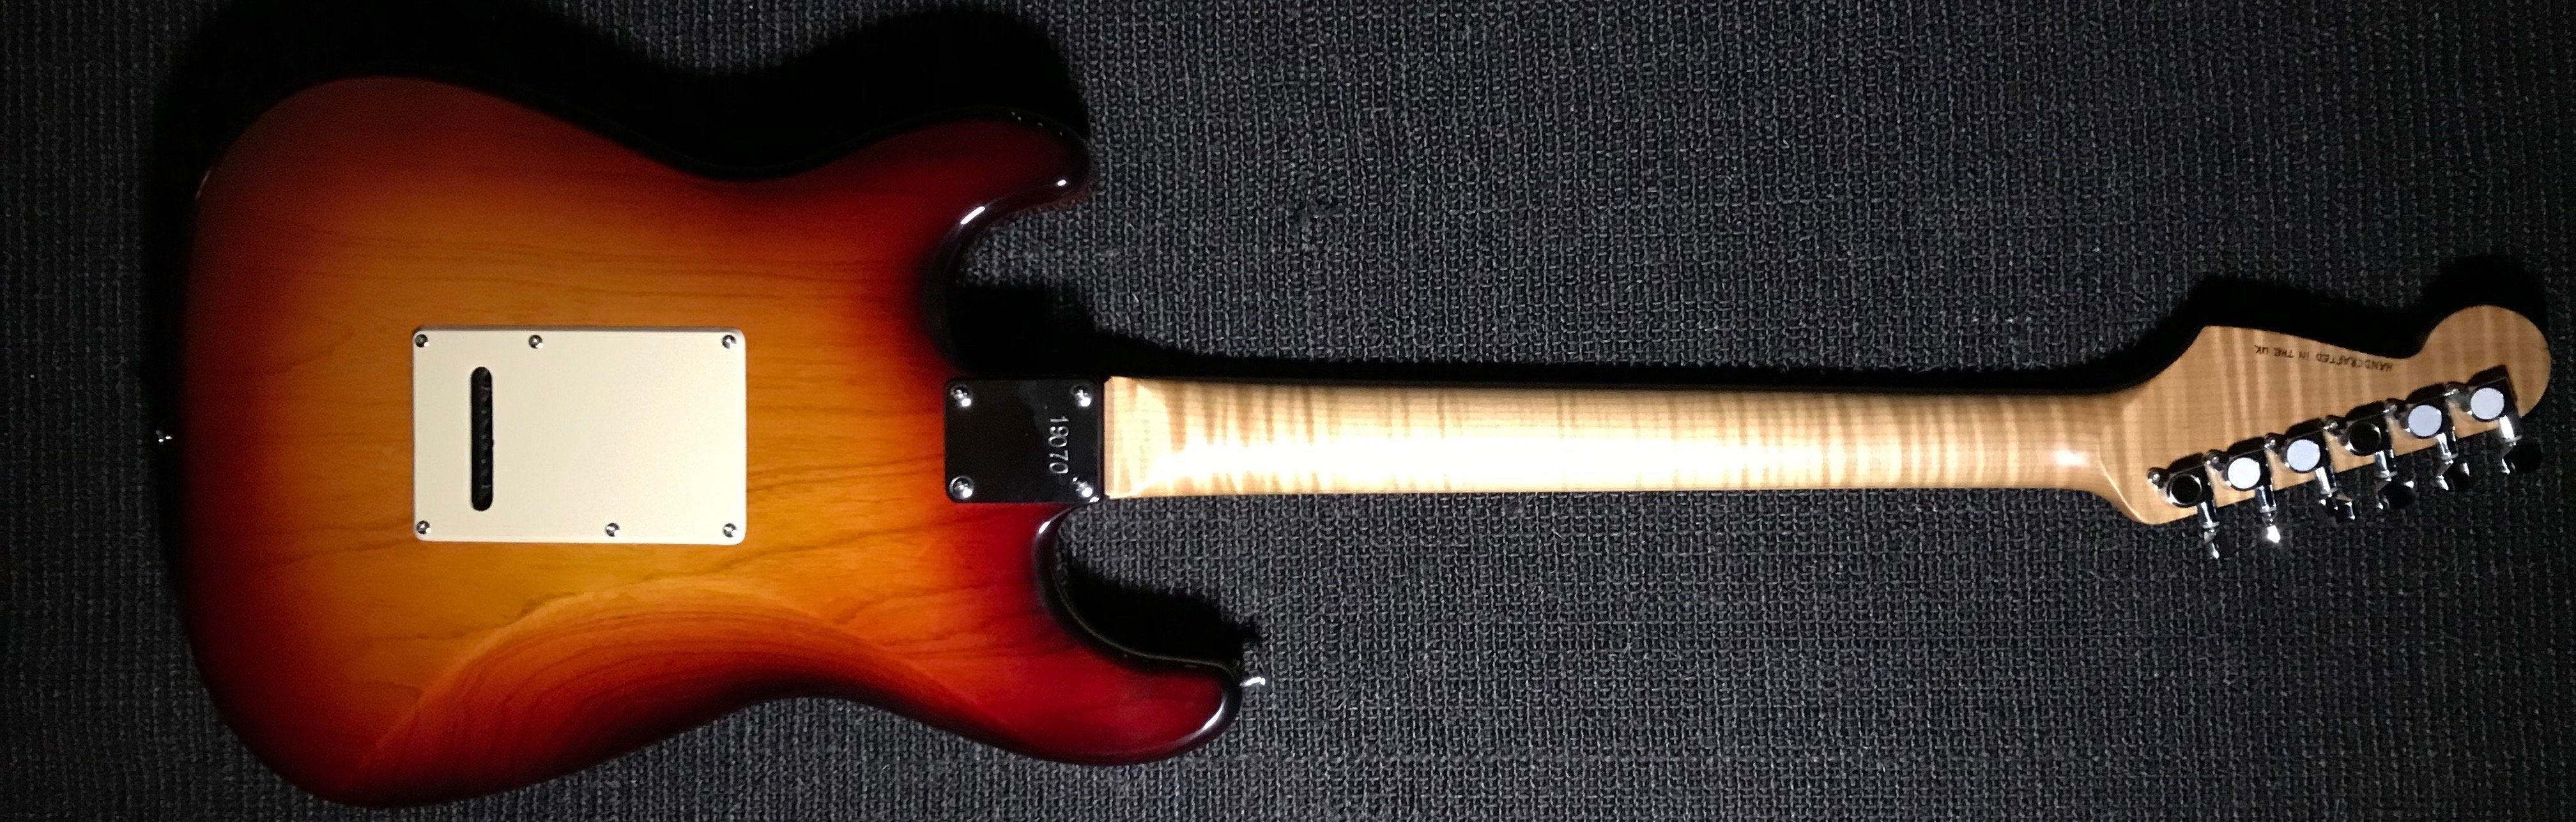 Gordon Classic S Autumn Burst Swamp Ash Custom, Electric Guitar for sale at Richards Guitars.